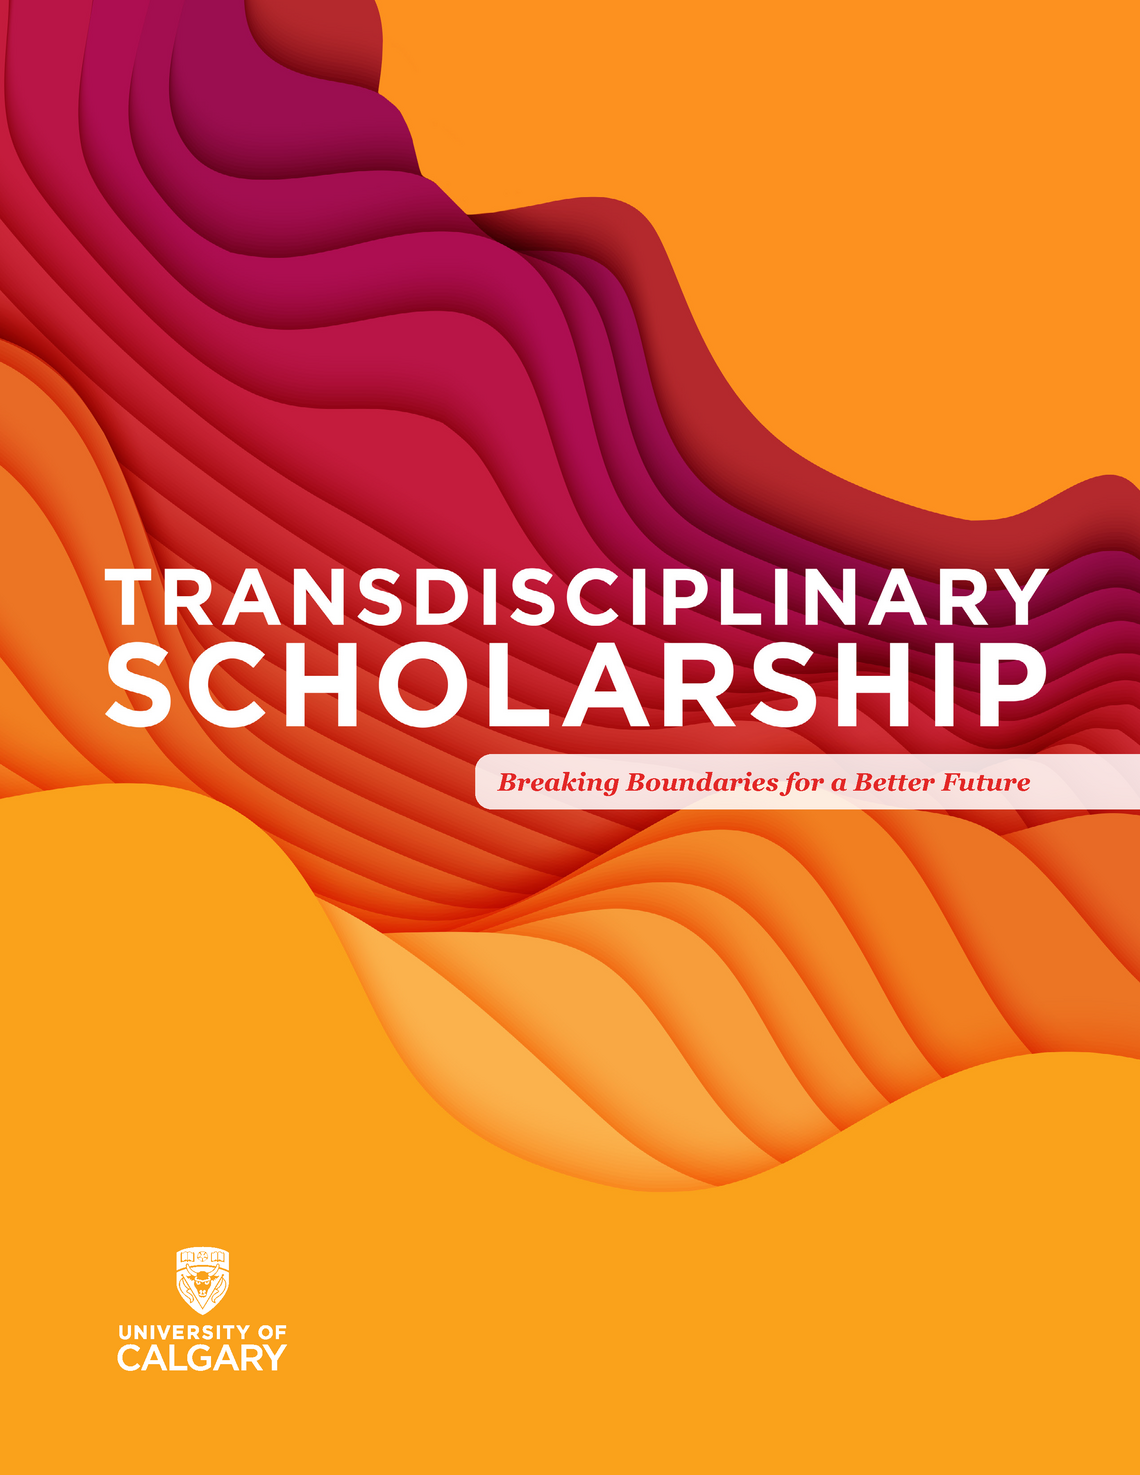 Cover image of transdisciplinary scholarship defining work executive summary